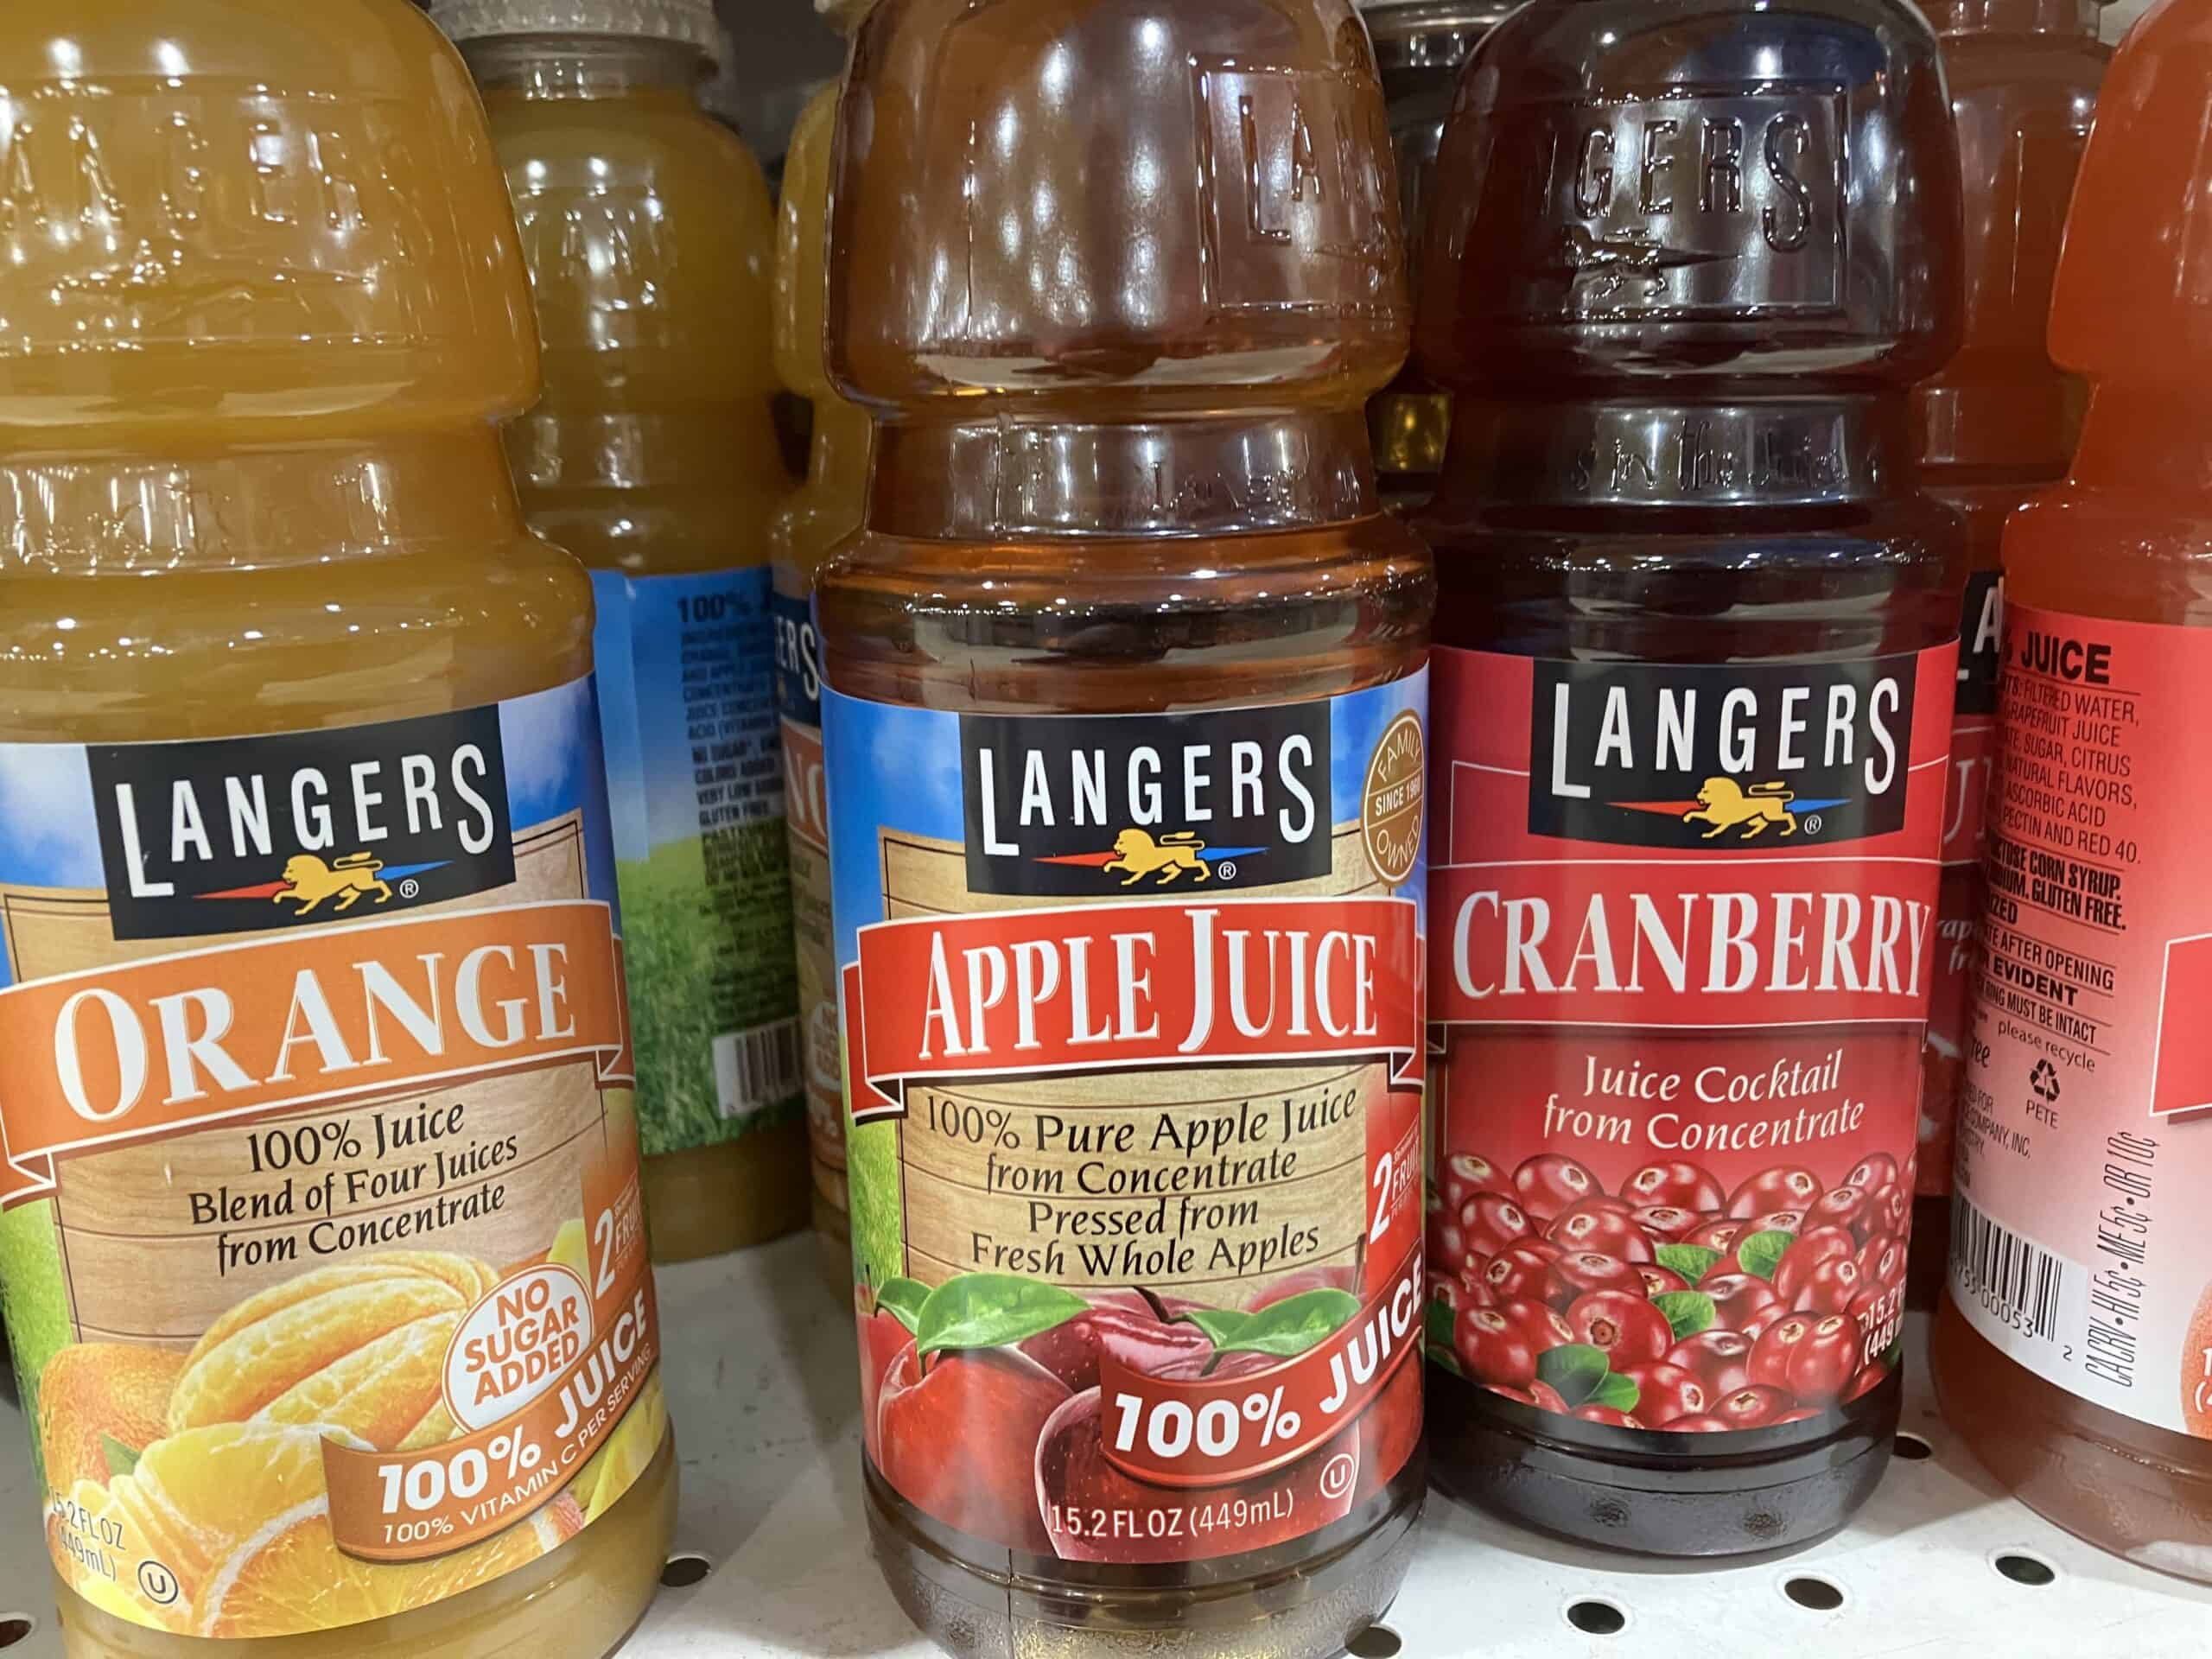 Langers juices